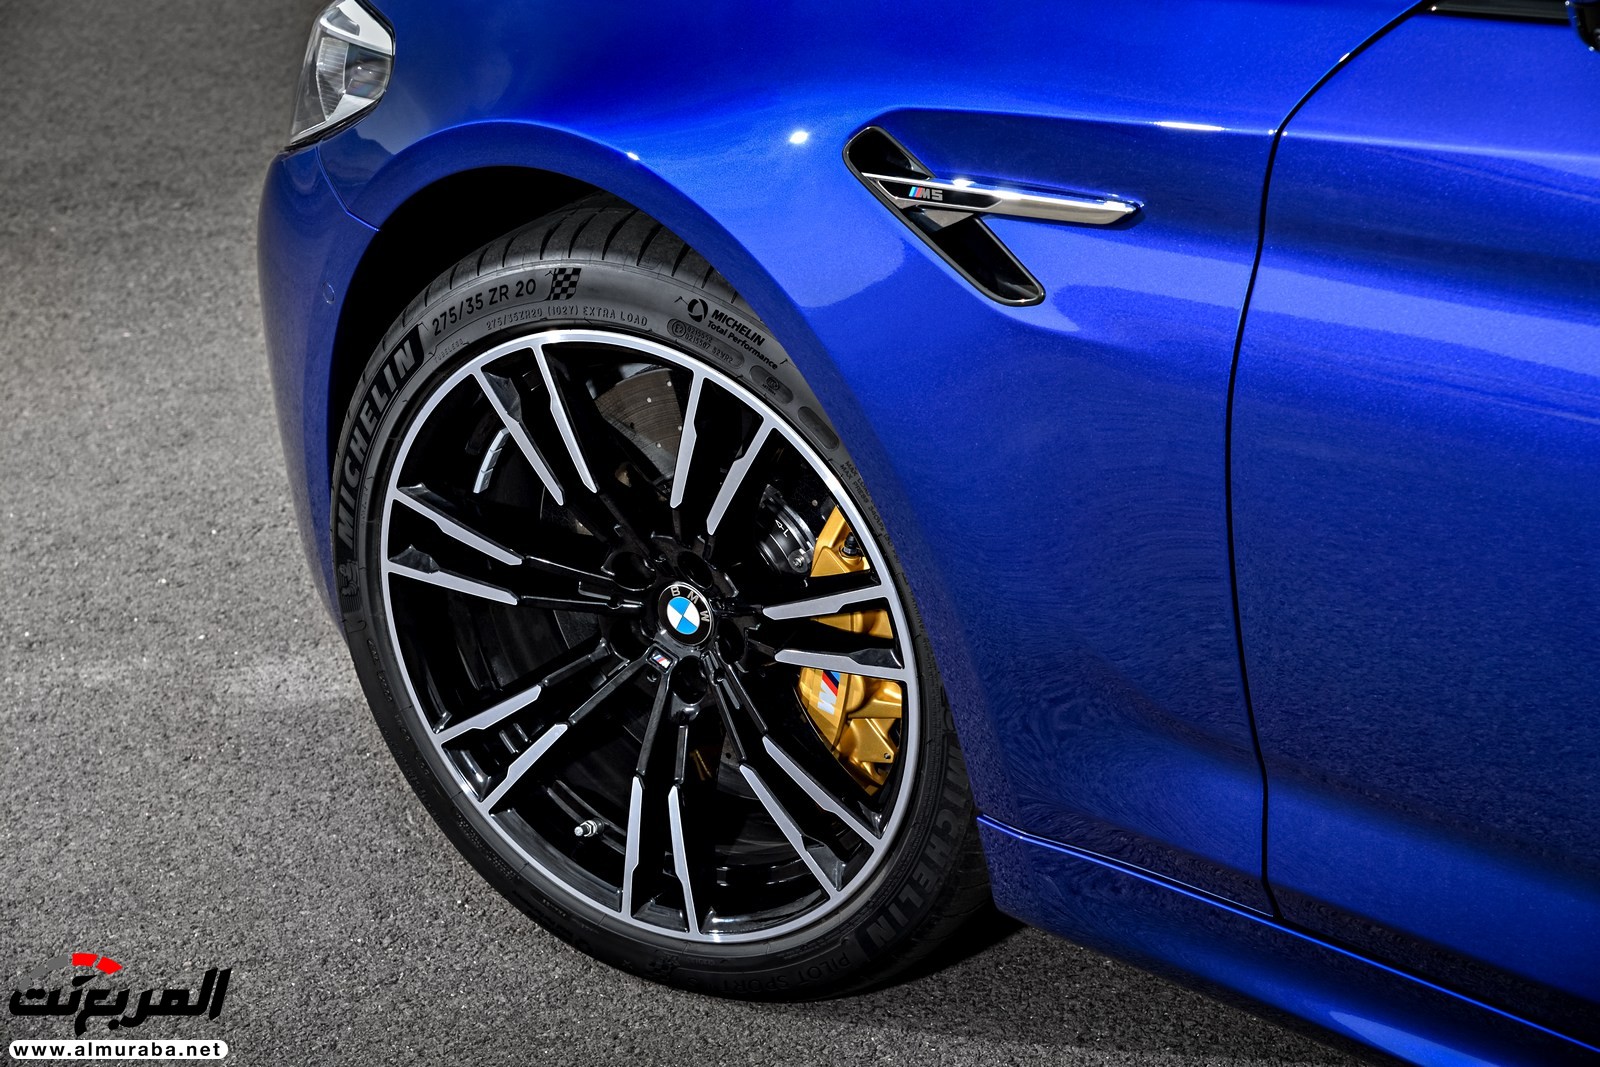 بي ام دبليو M5 2018 تكشف نفسها رسمياً بقوة ٦٠٠ حصان "صور ومواصفات" BMW 166